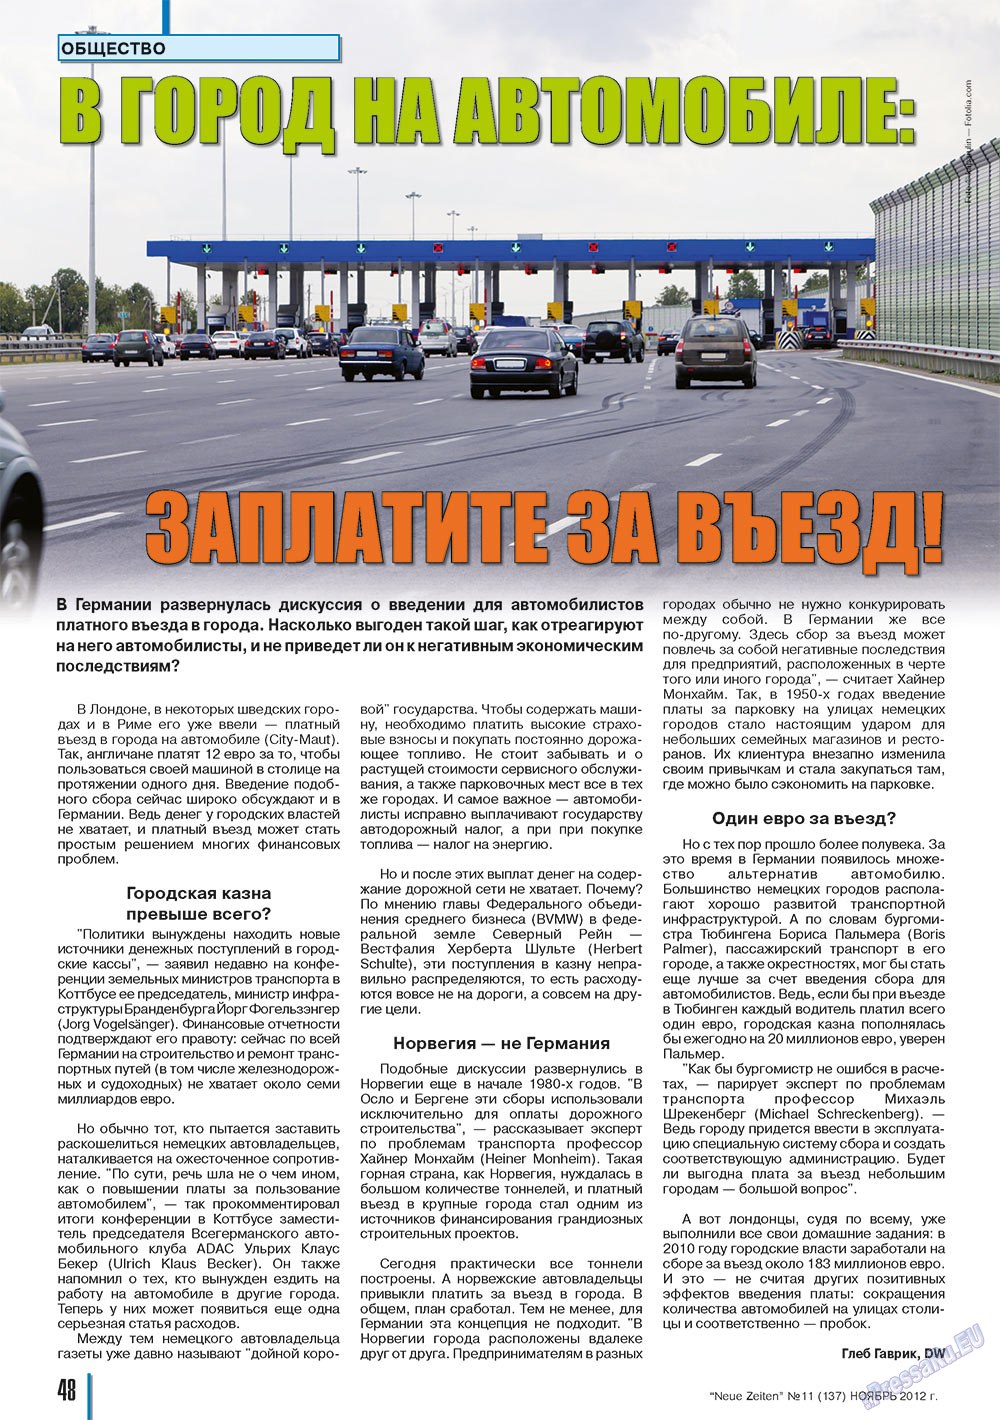 Neue Zeiten (журнал). 2012 год, номер 11, стр. 48